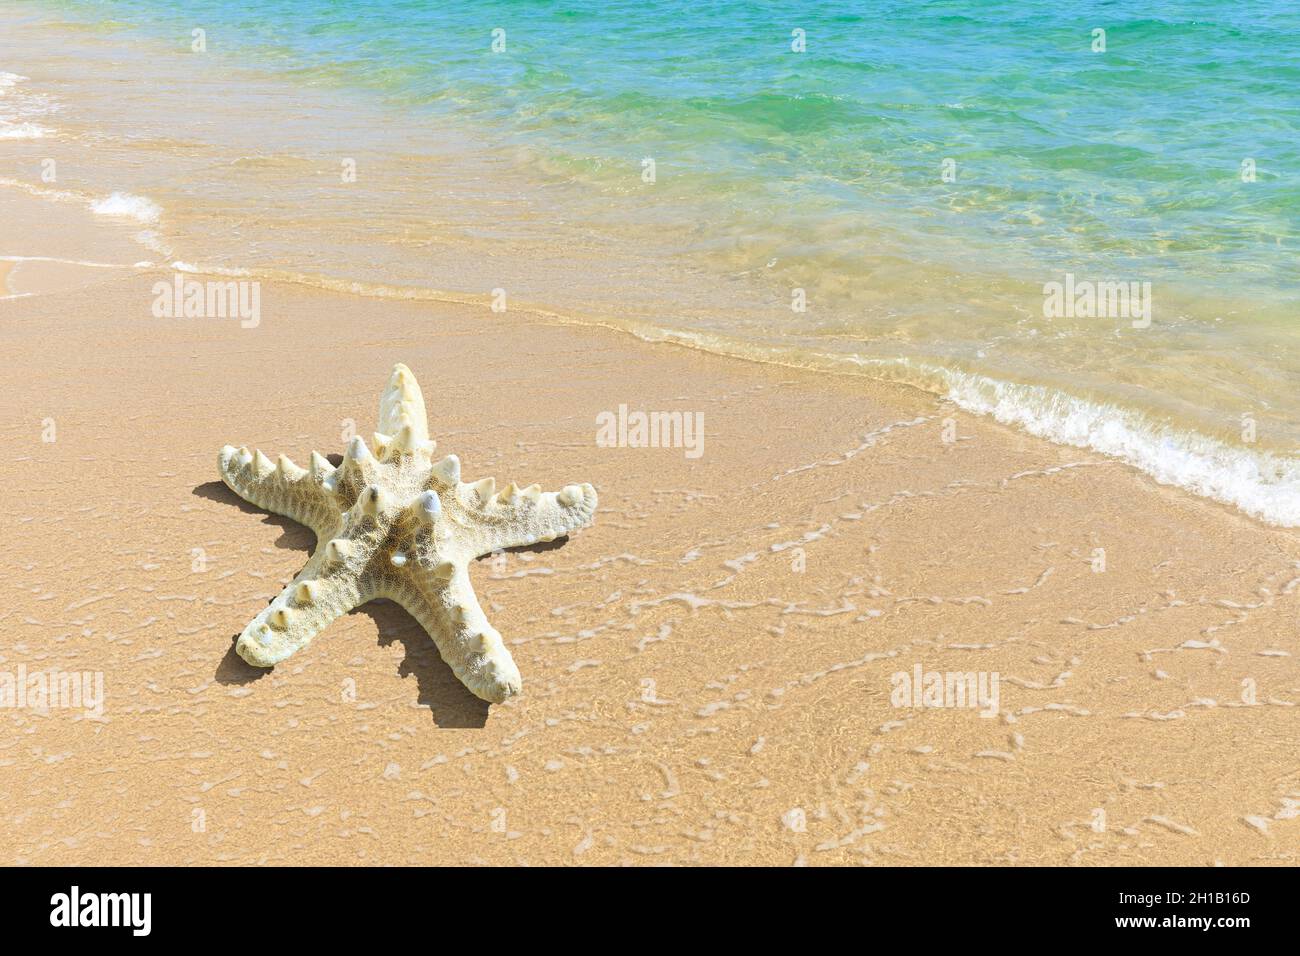 Starfish on a beach sand. Stock Photo